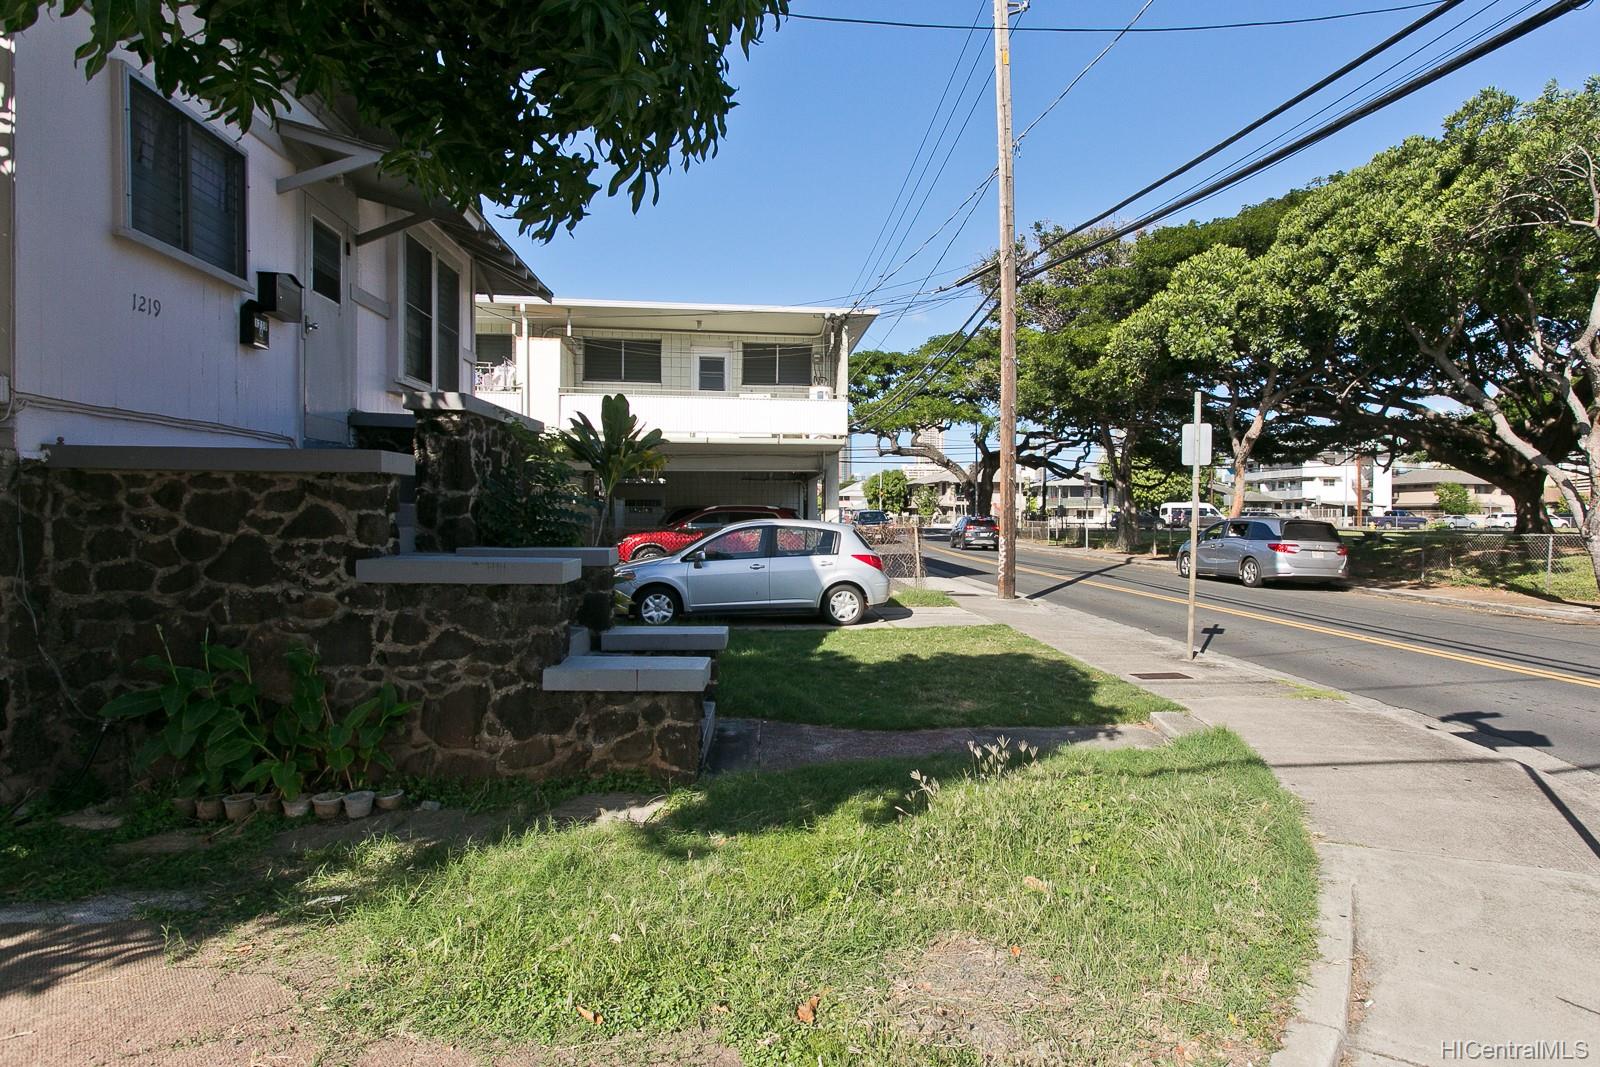 1219 Rycroft Street Honolulu - Multi-family - photo 19 of 19